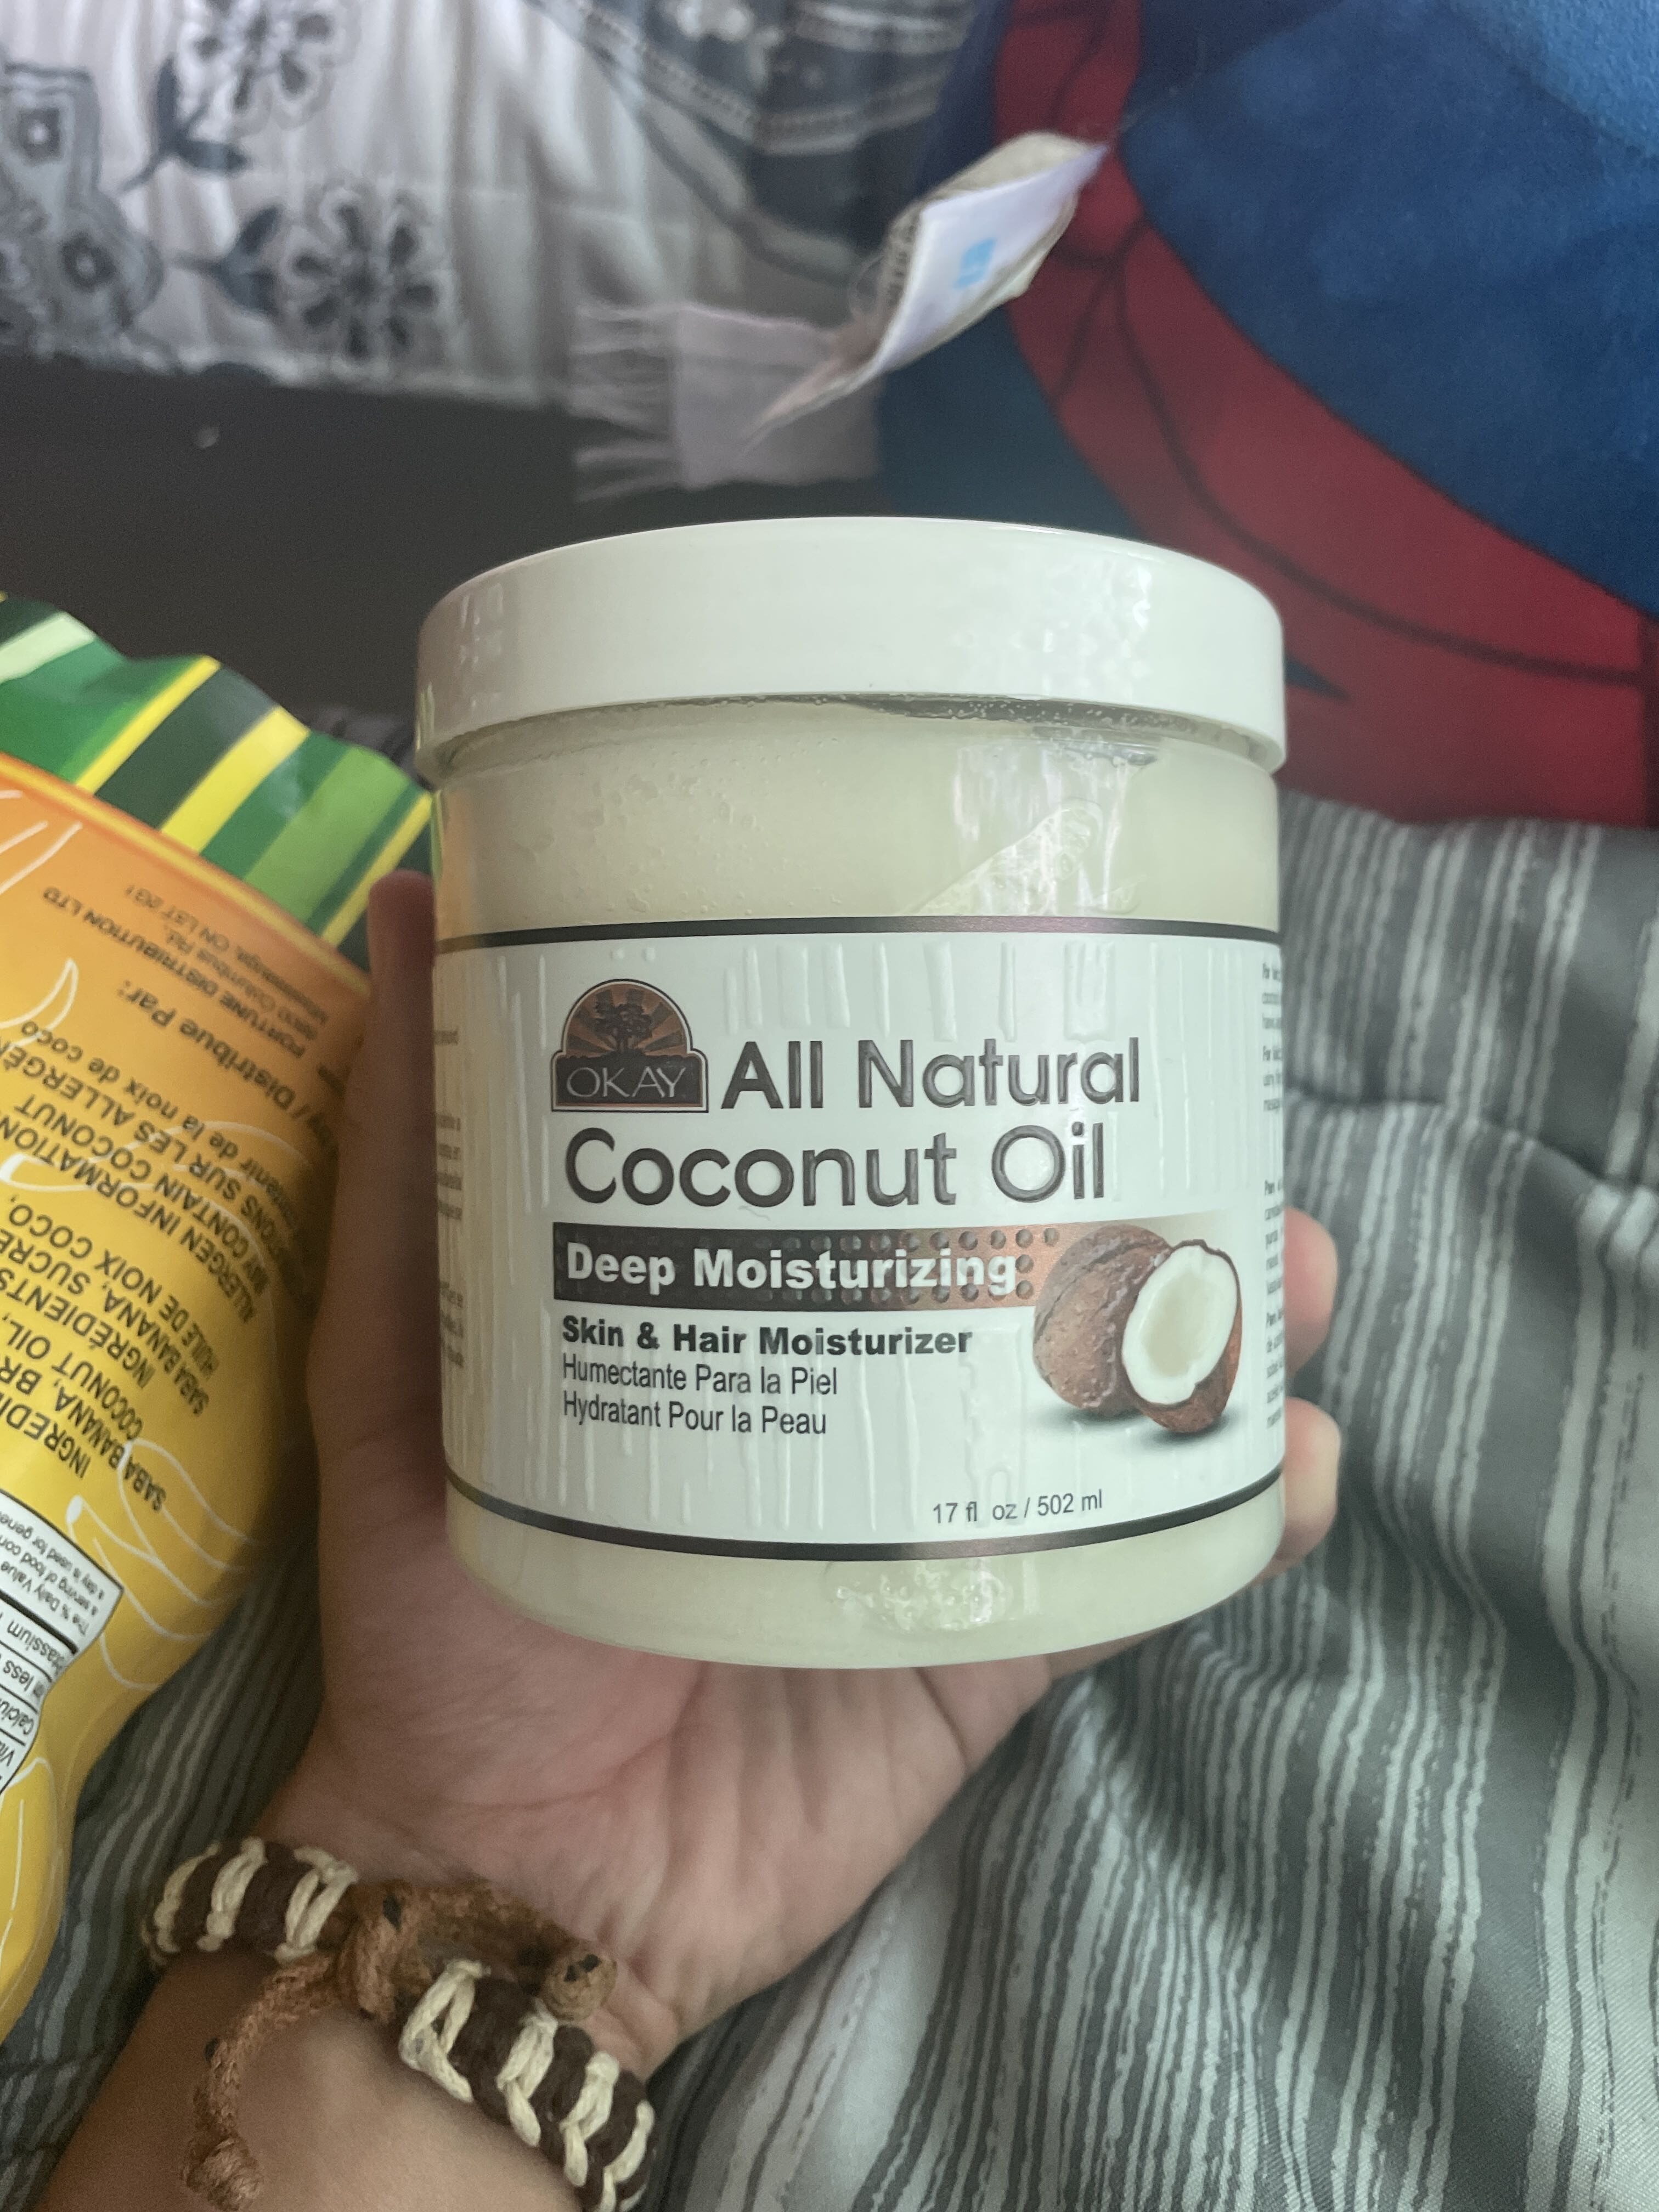 All natural coconut oil - Product - en